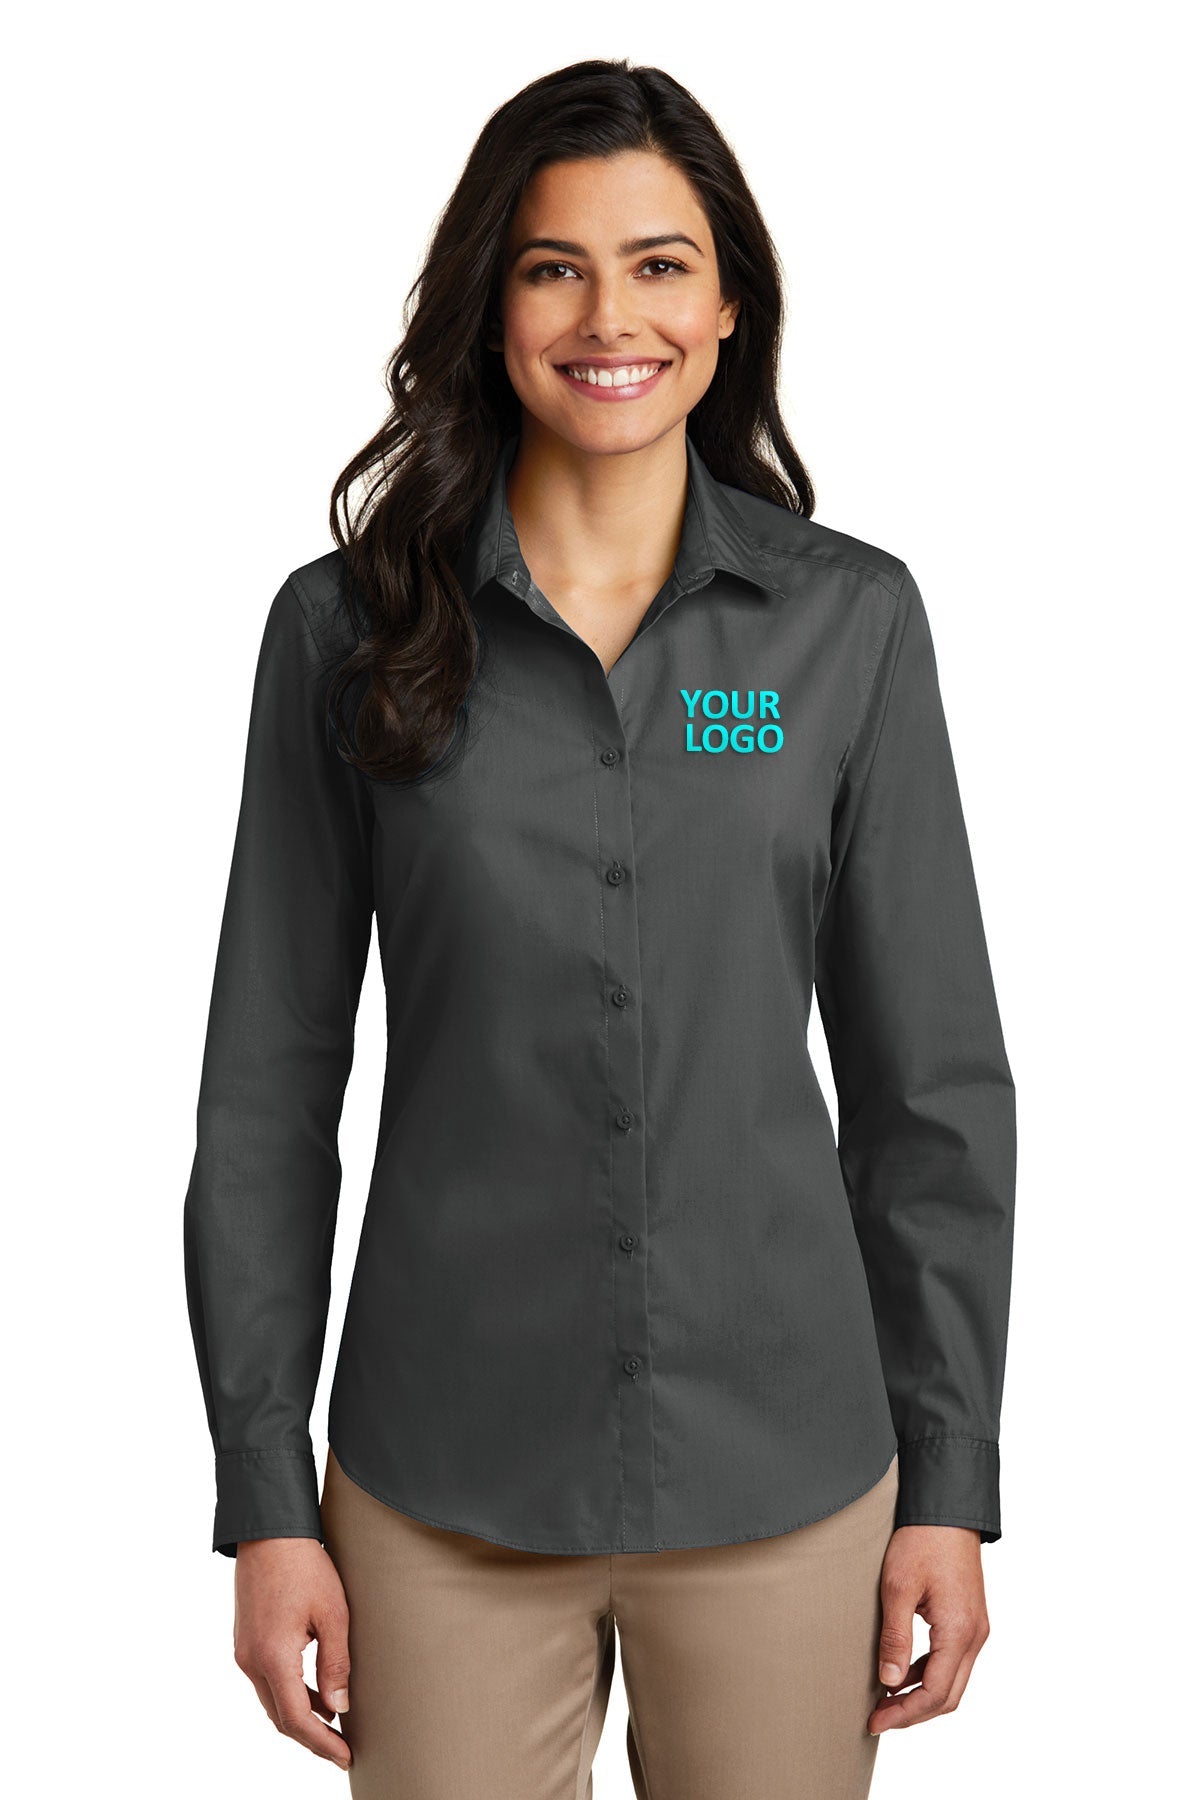 Port Authority Graphite LW100 company logo shirts